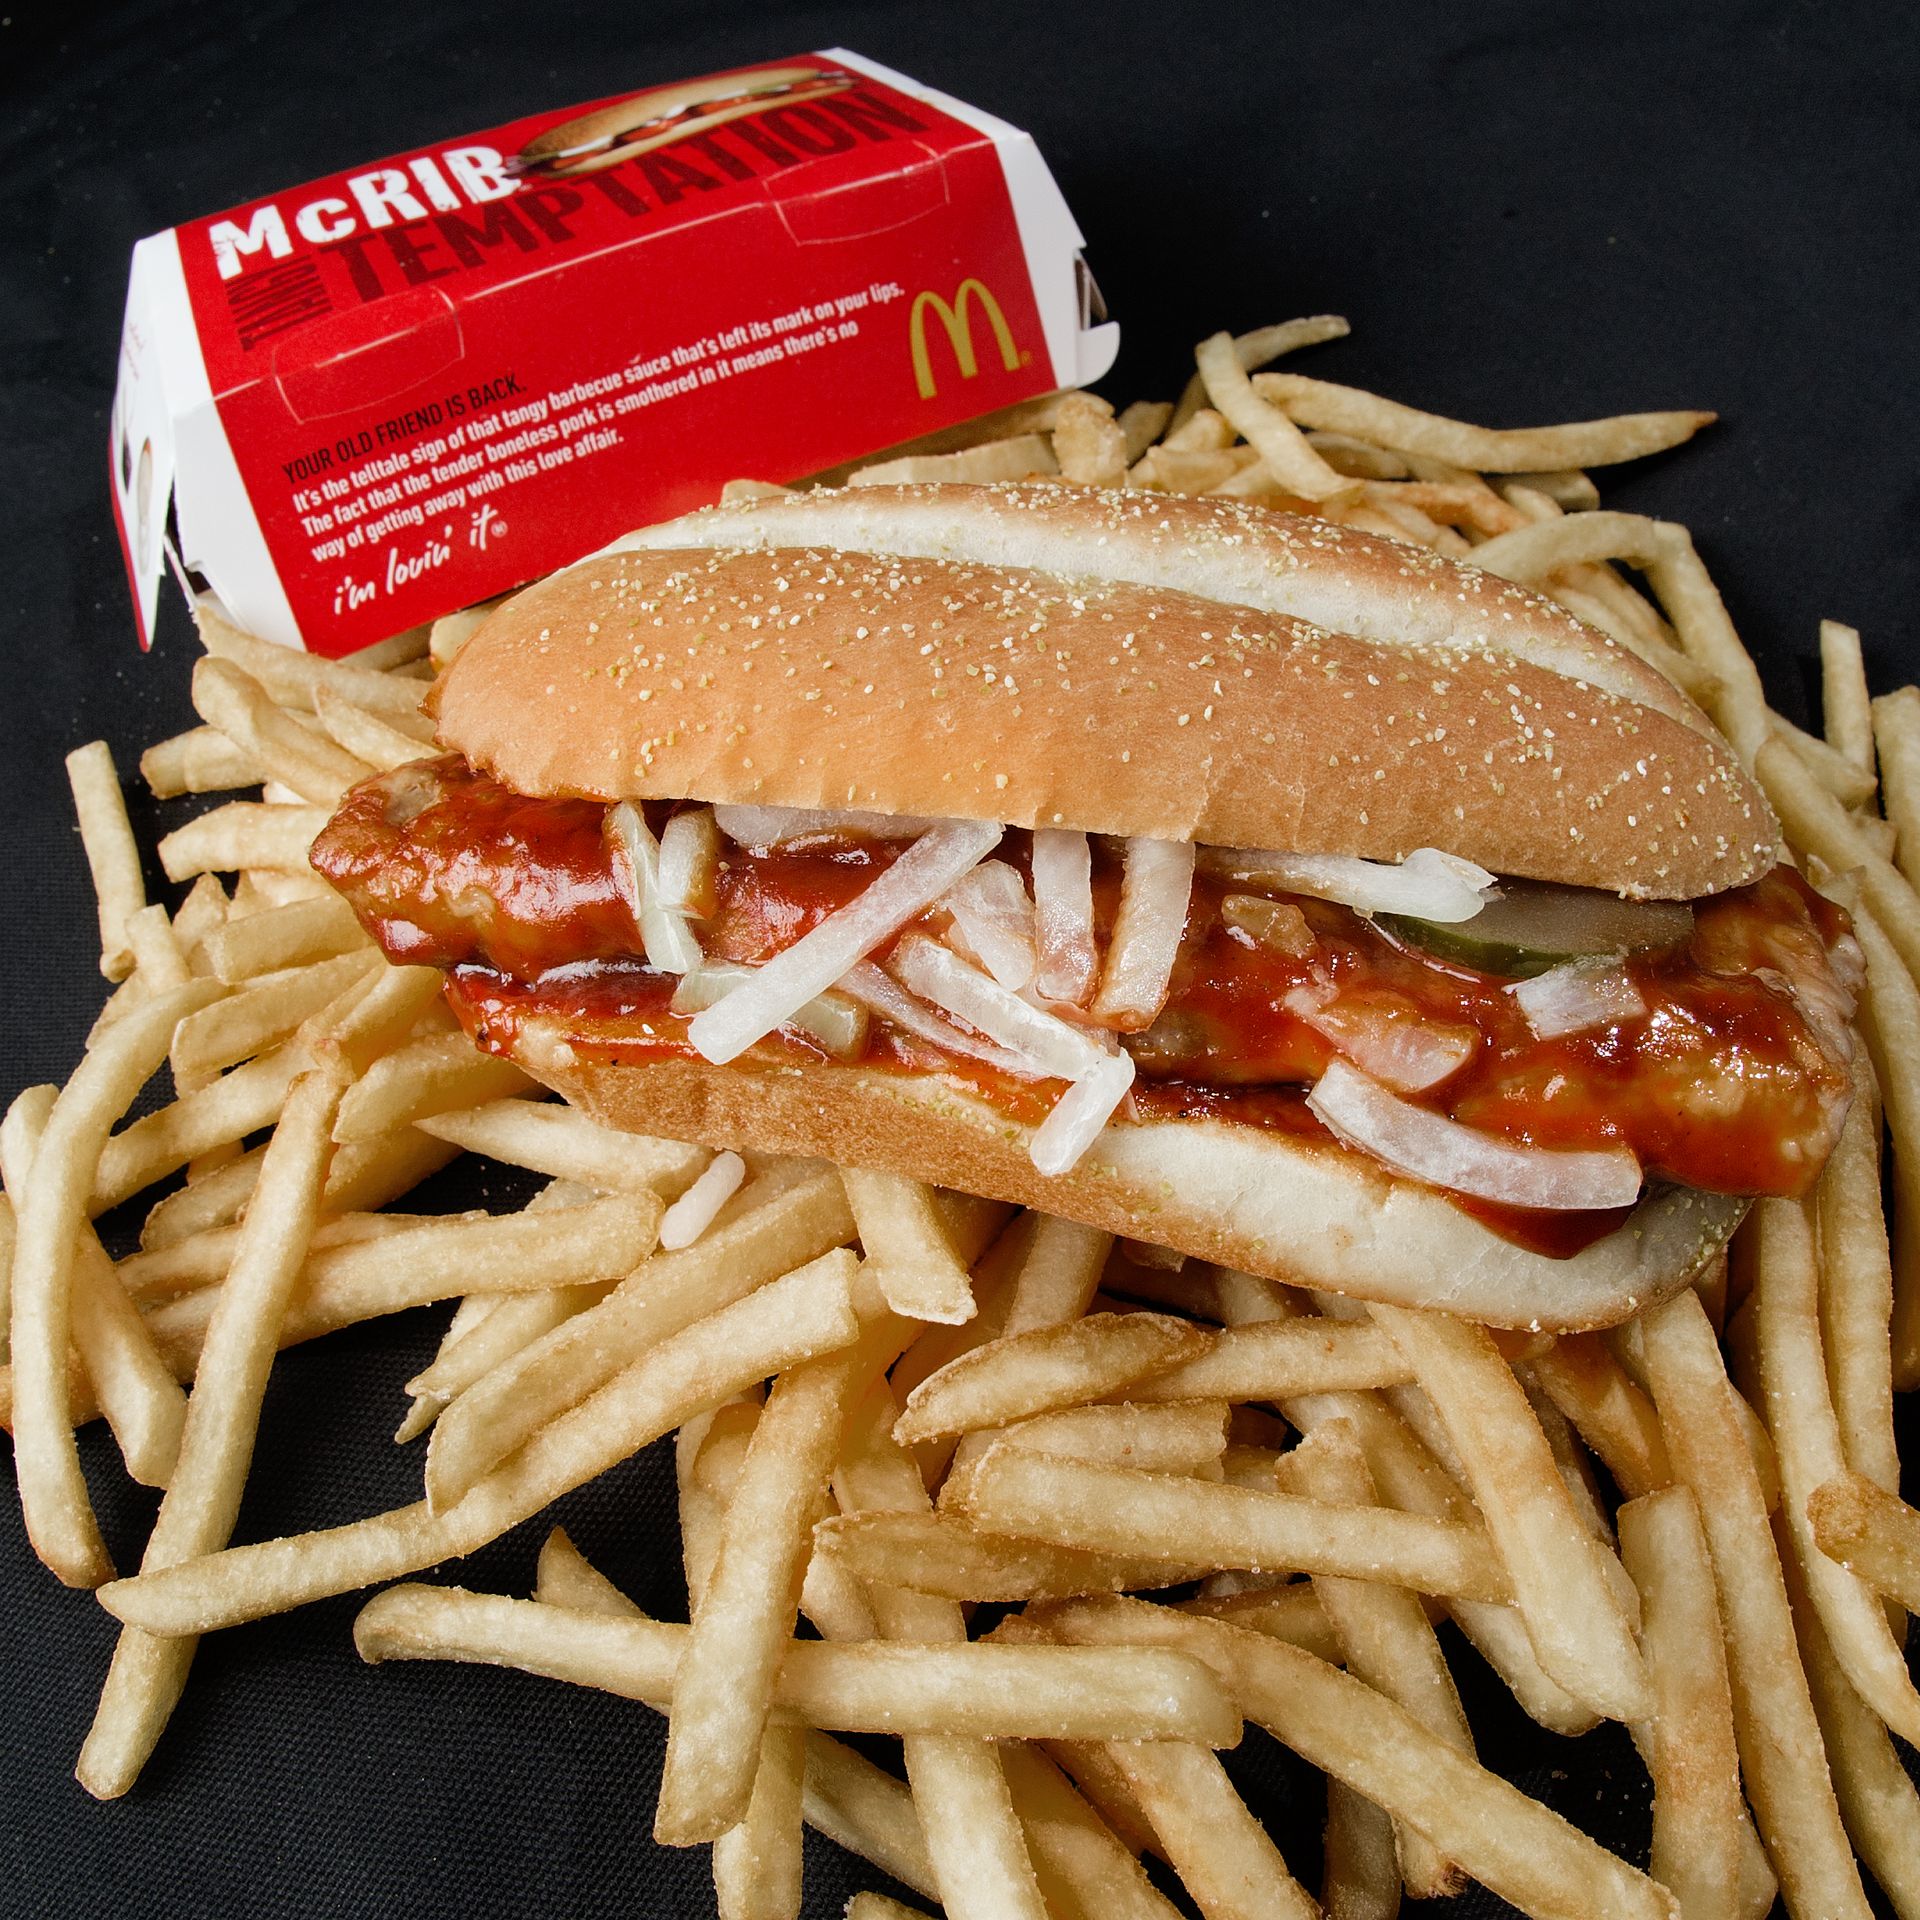 A photo of a McDonalds' McRib sandwich